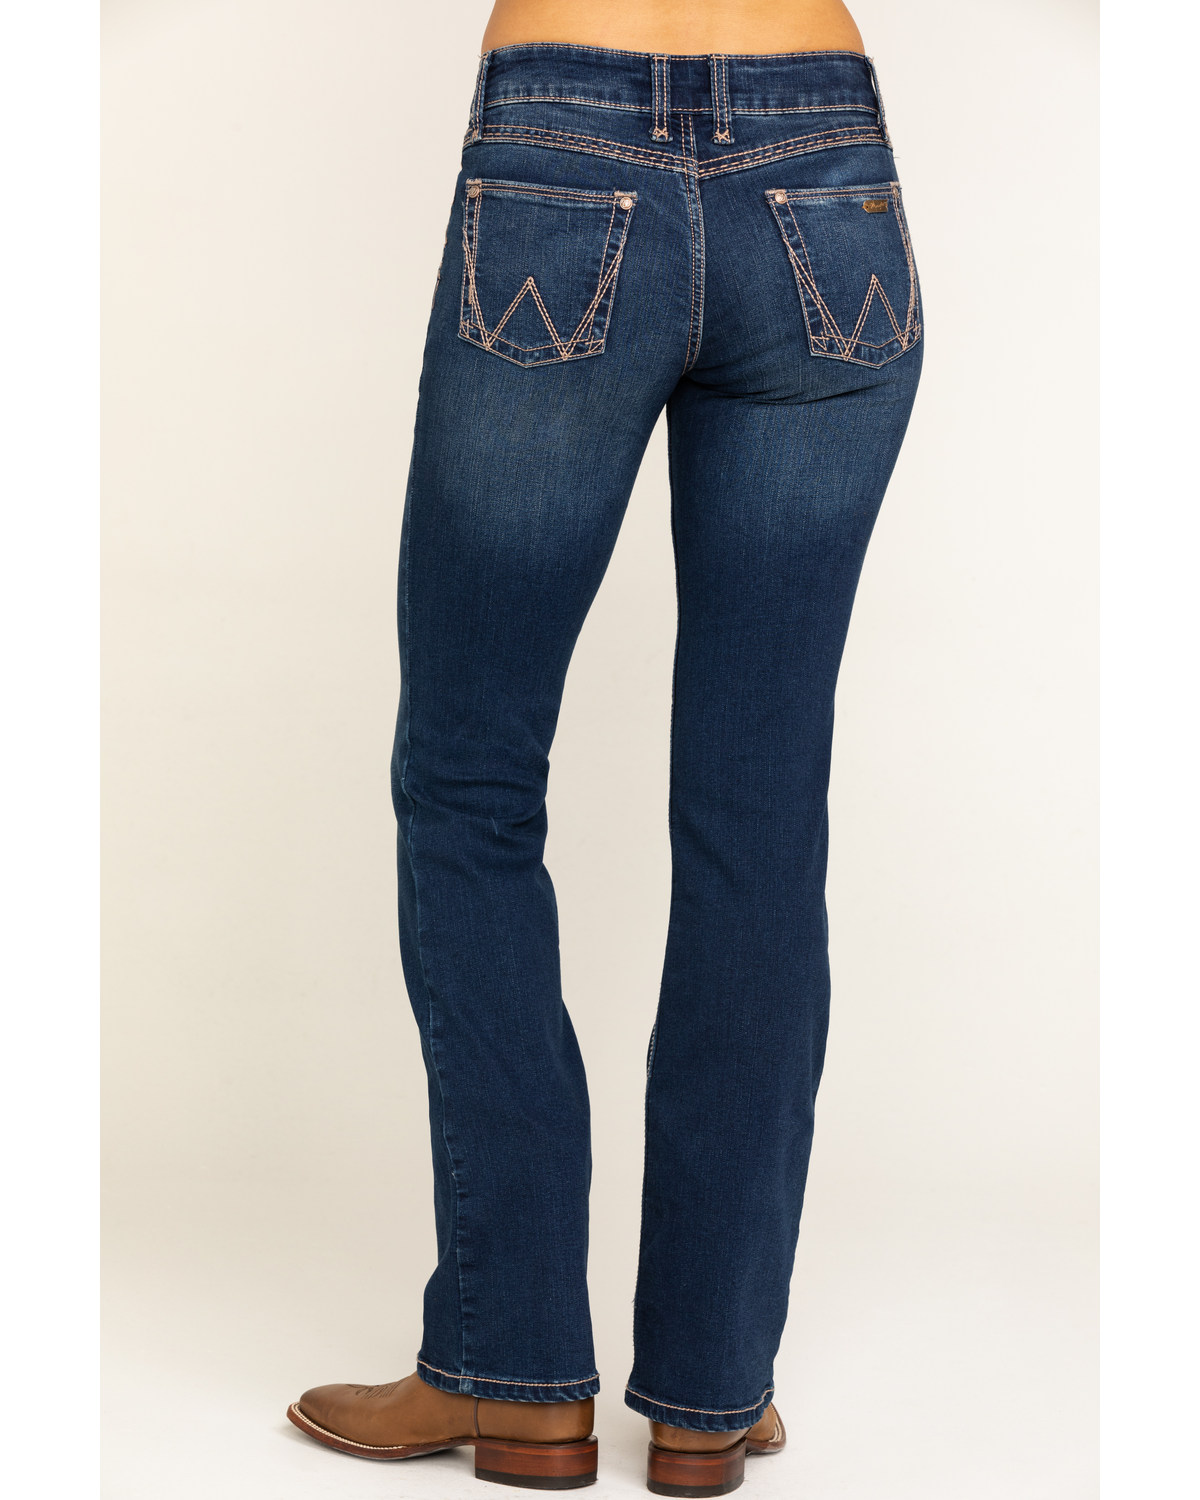 Wrangler Women's Dark Wash Retro Mae Jeans Indigo 9W x 34L - image 4 of 7